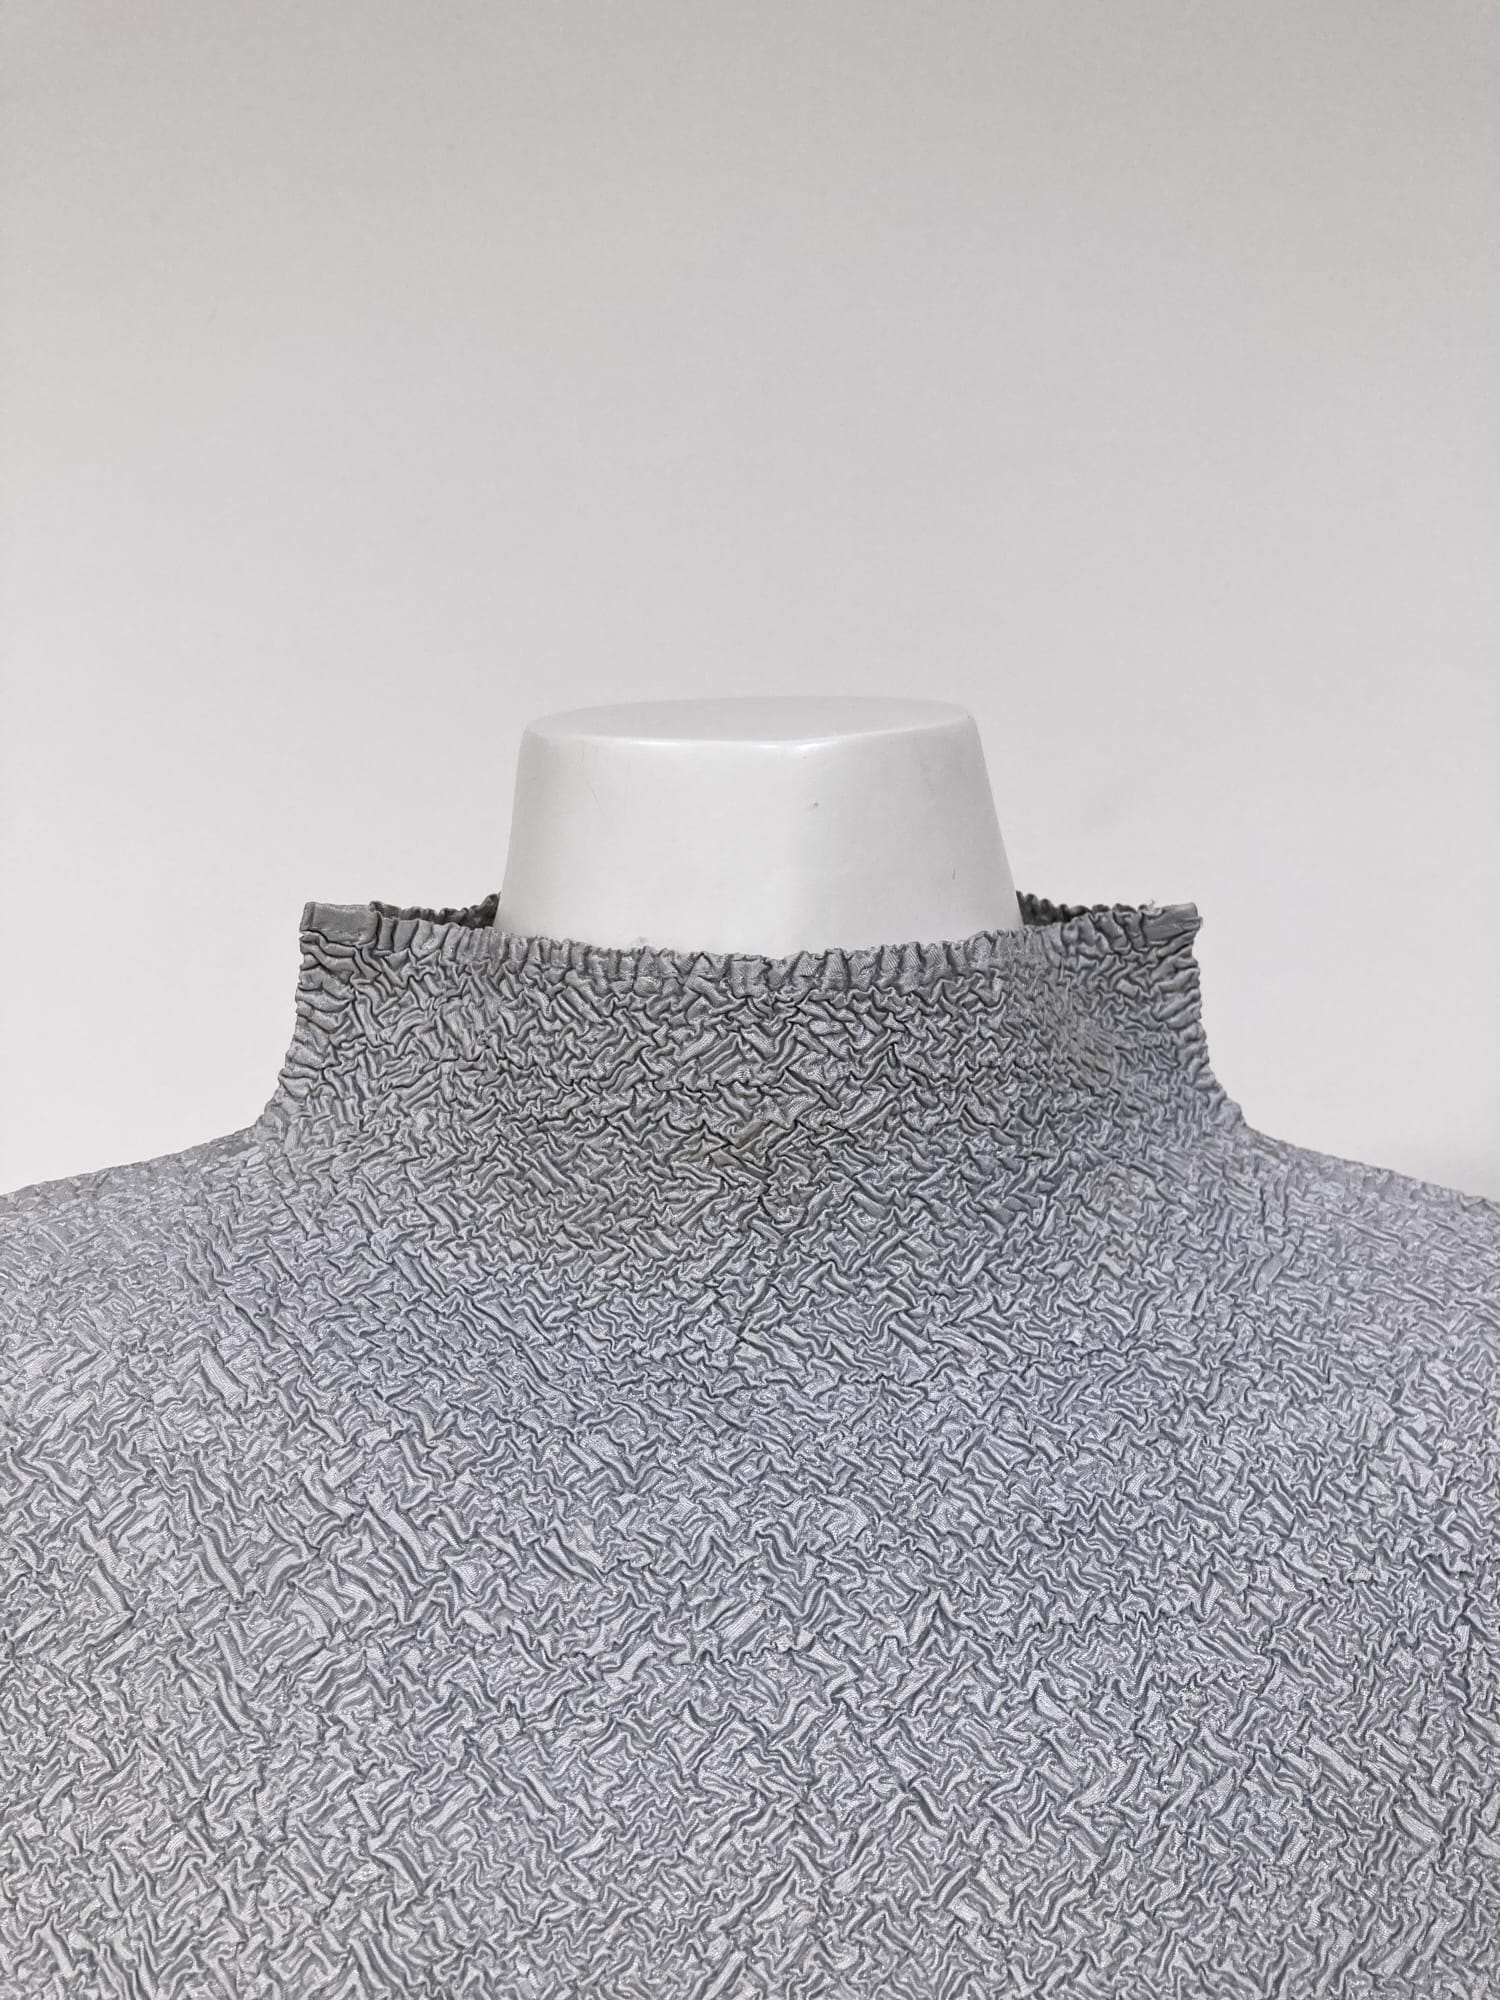 Wrinqle Inoue Pleats grey wrinkled polyester short sleeve mock neck top